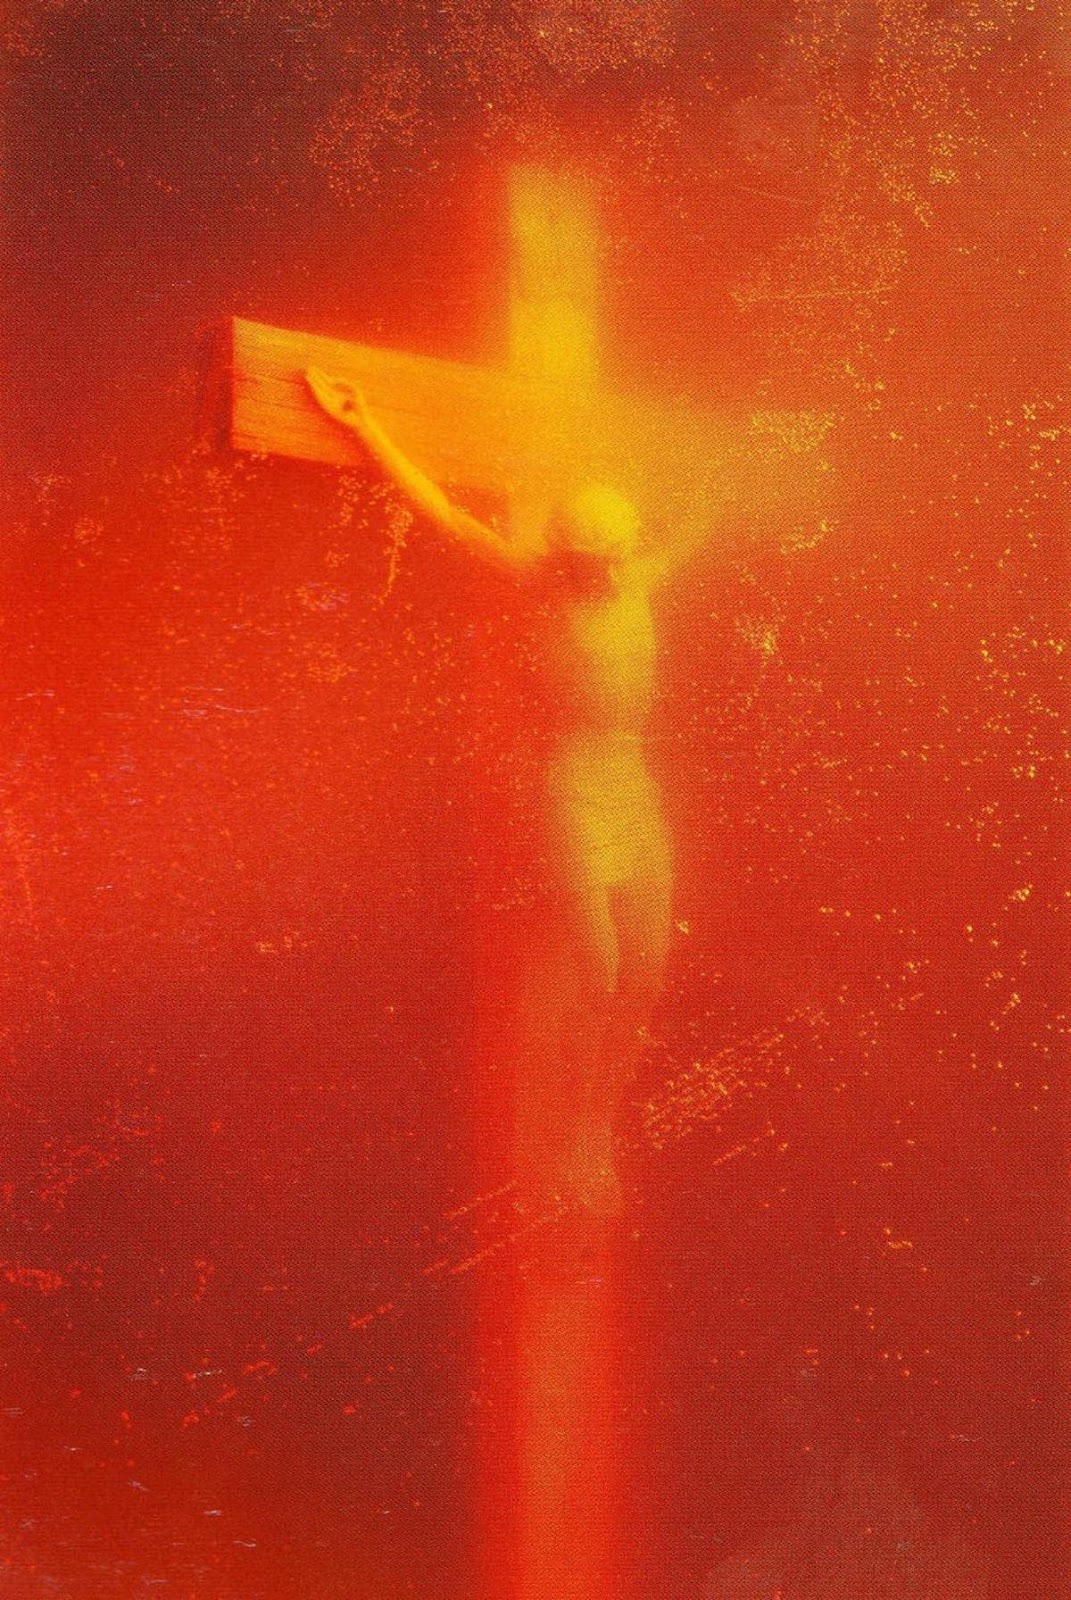 Piss Christ, Andres Serrano, 1987, via Renew the Arts